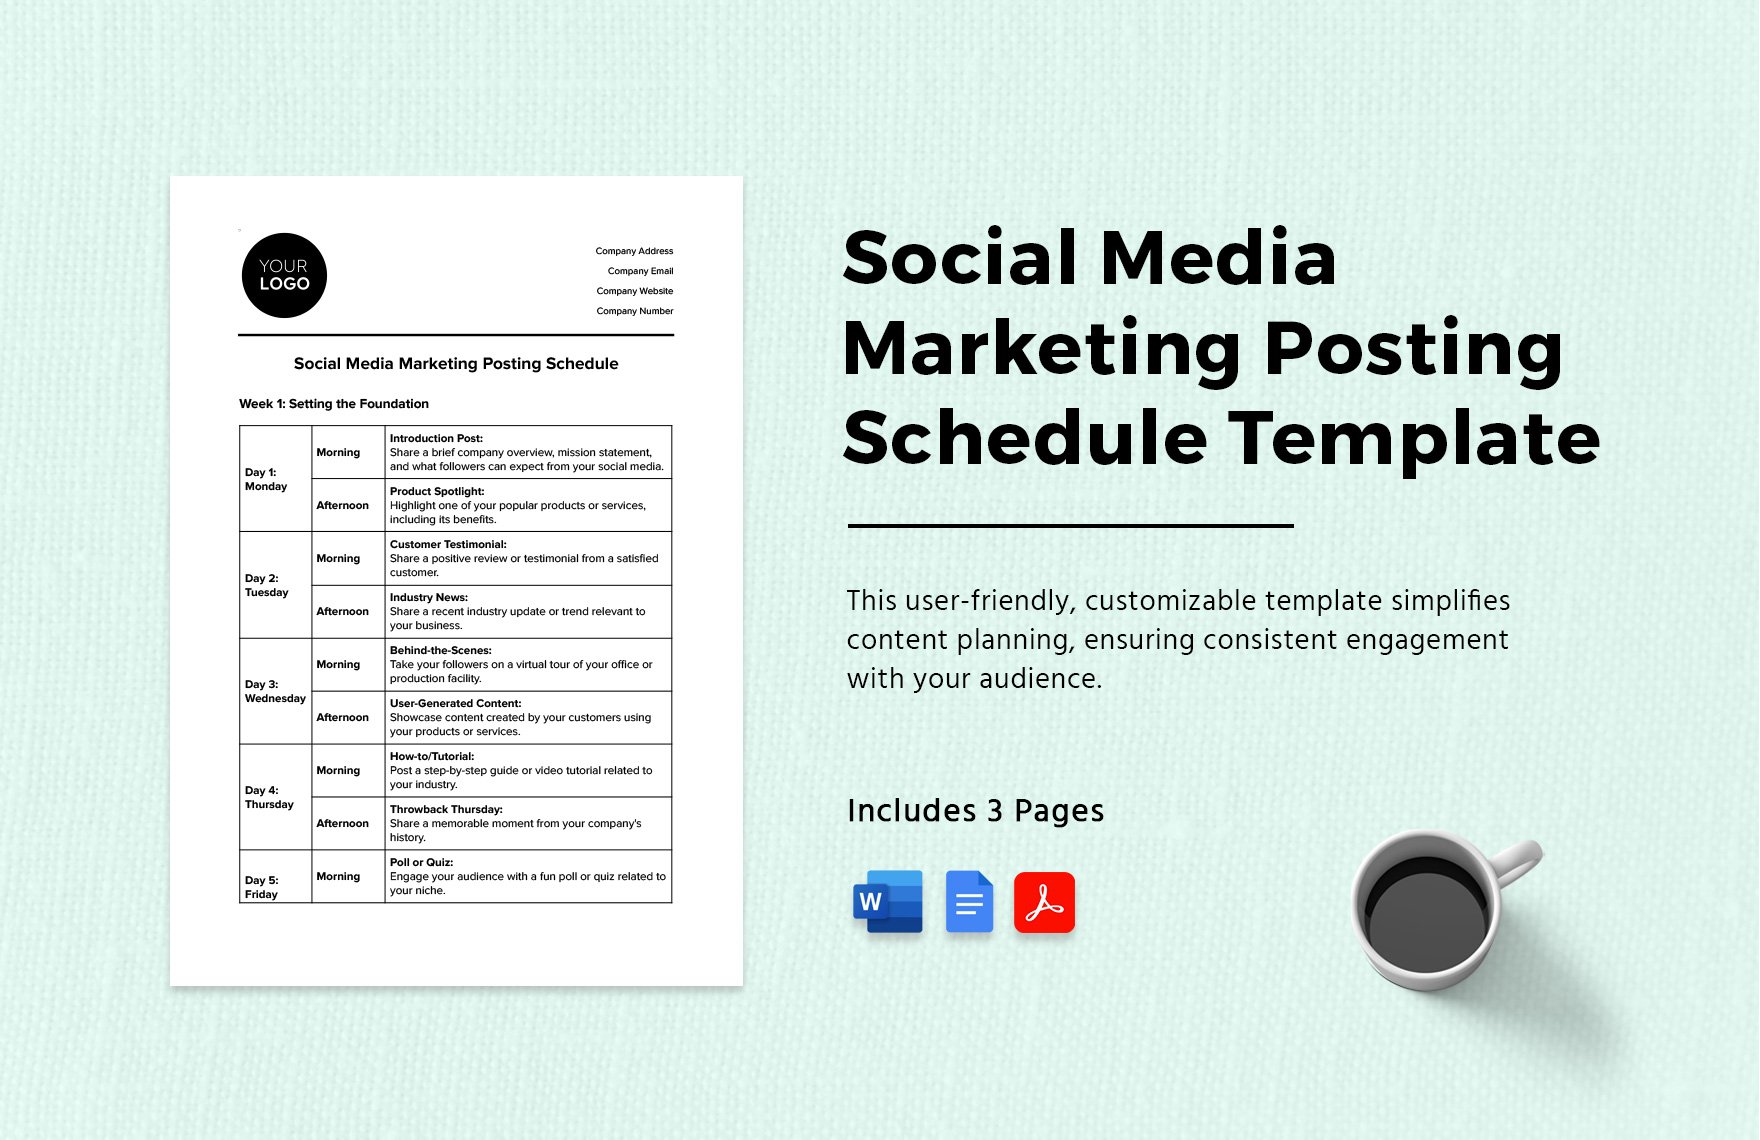 Social Media Marketing Posting Schedule Template in Word, Google Docs, PDF